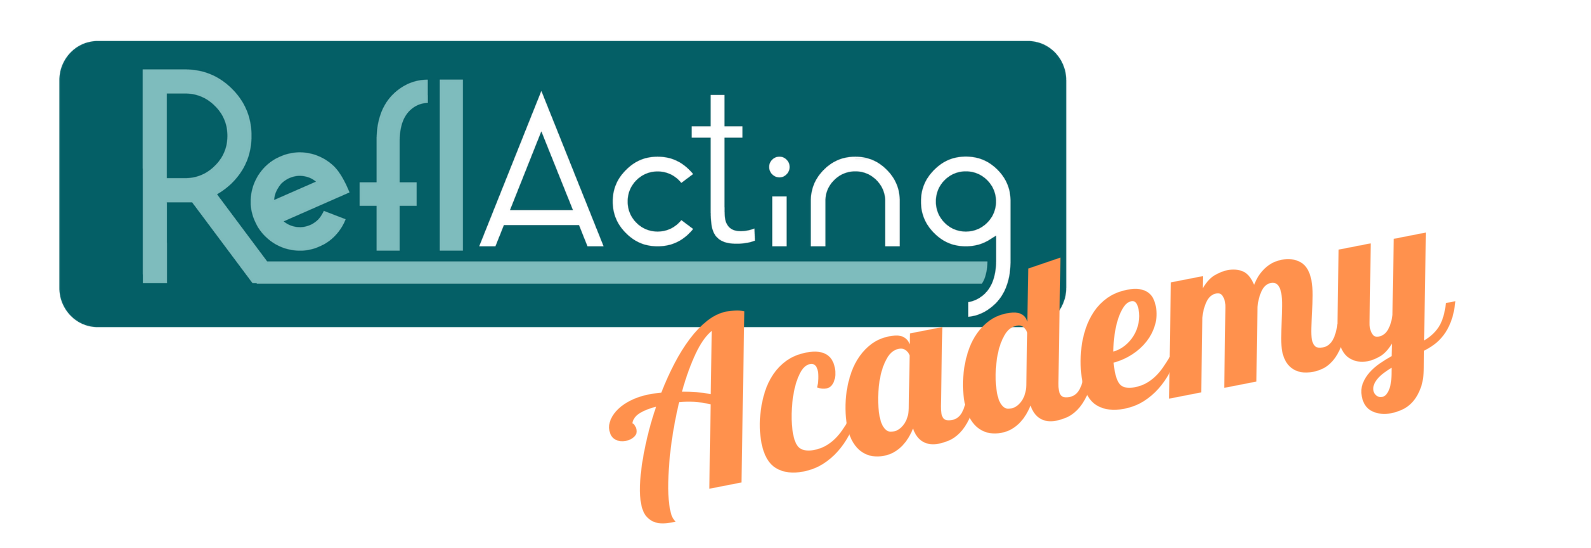 Academy-banner-3